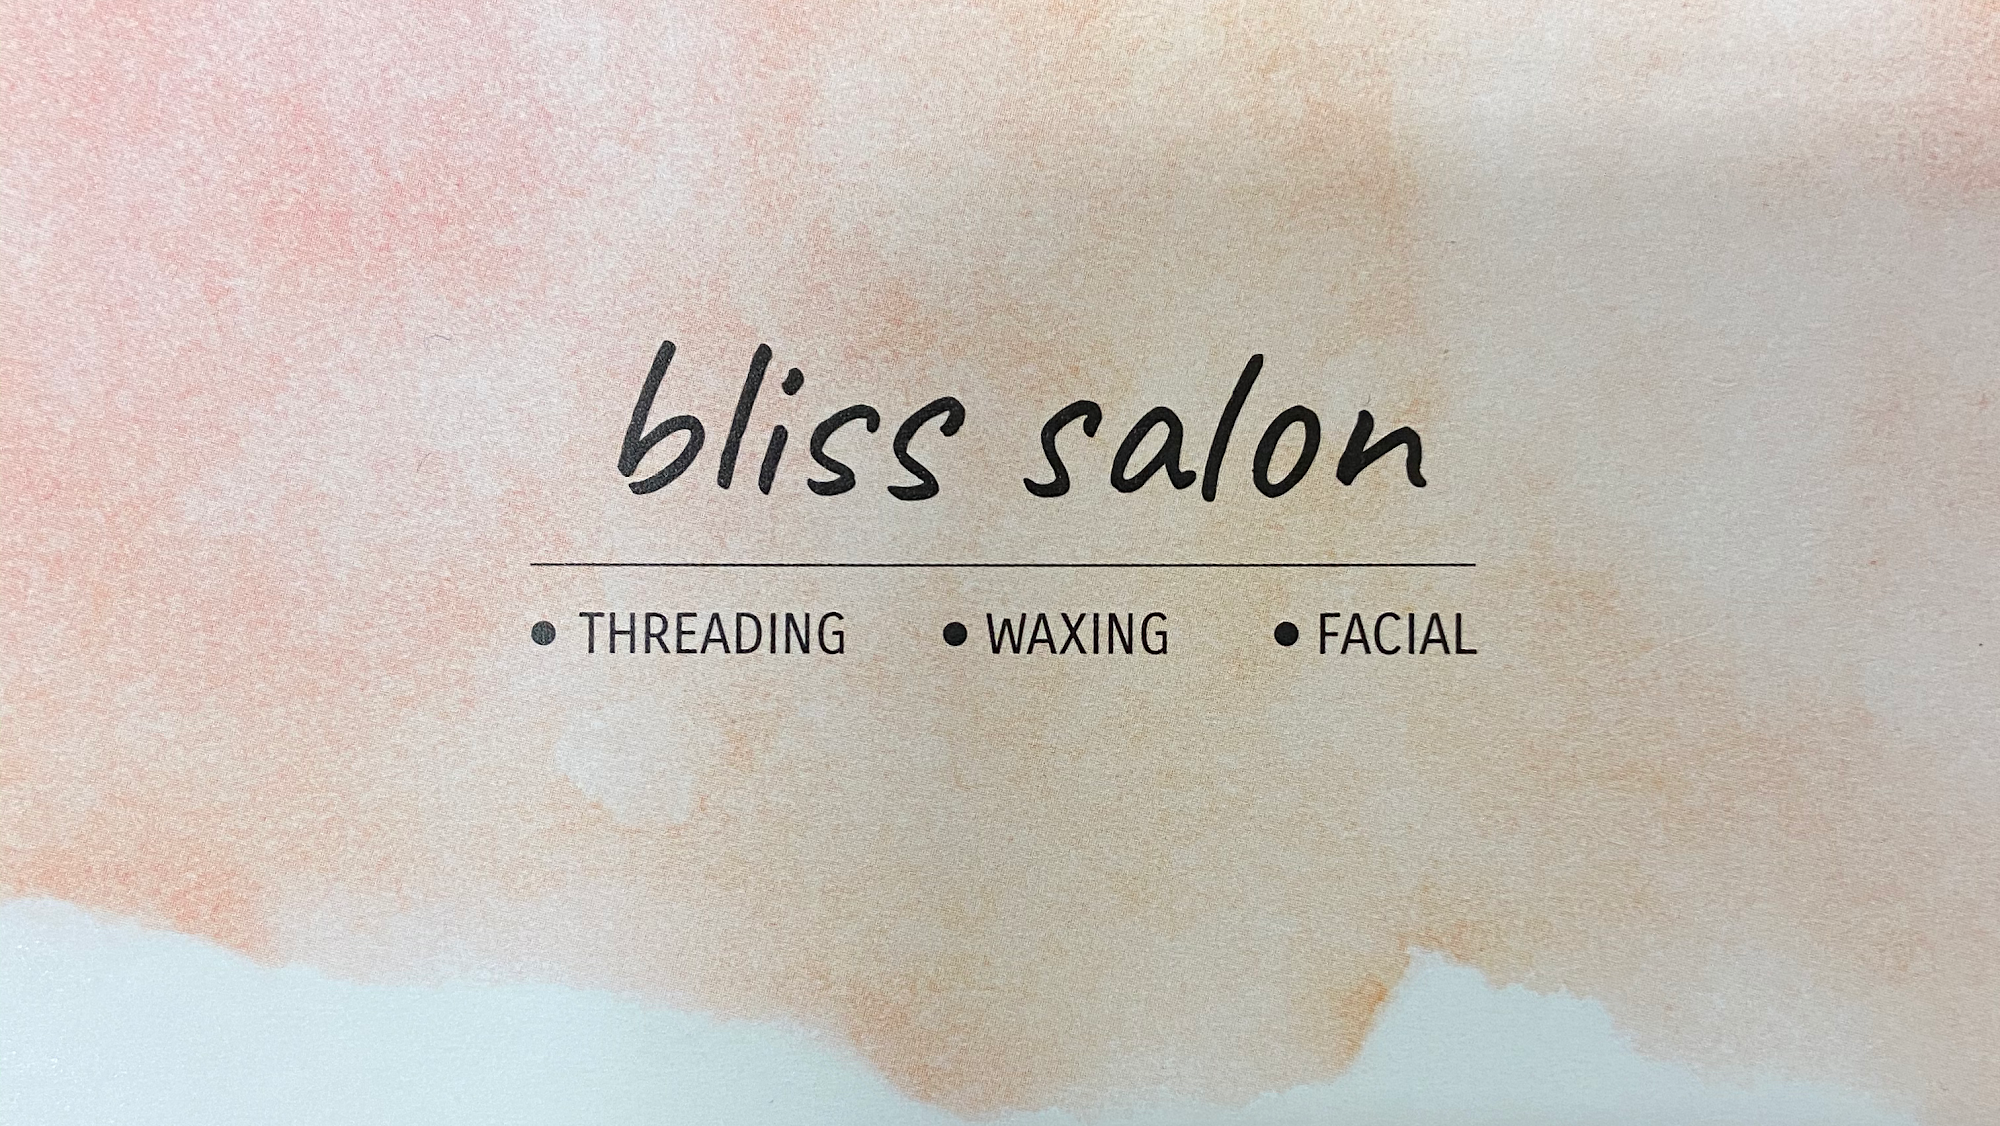 Bliss salon (threading)